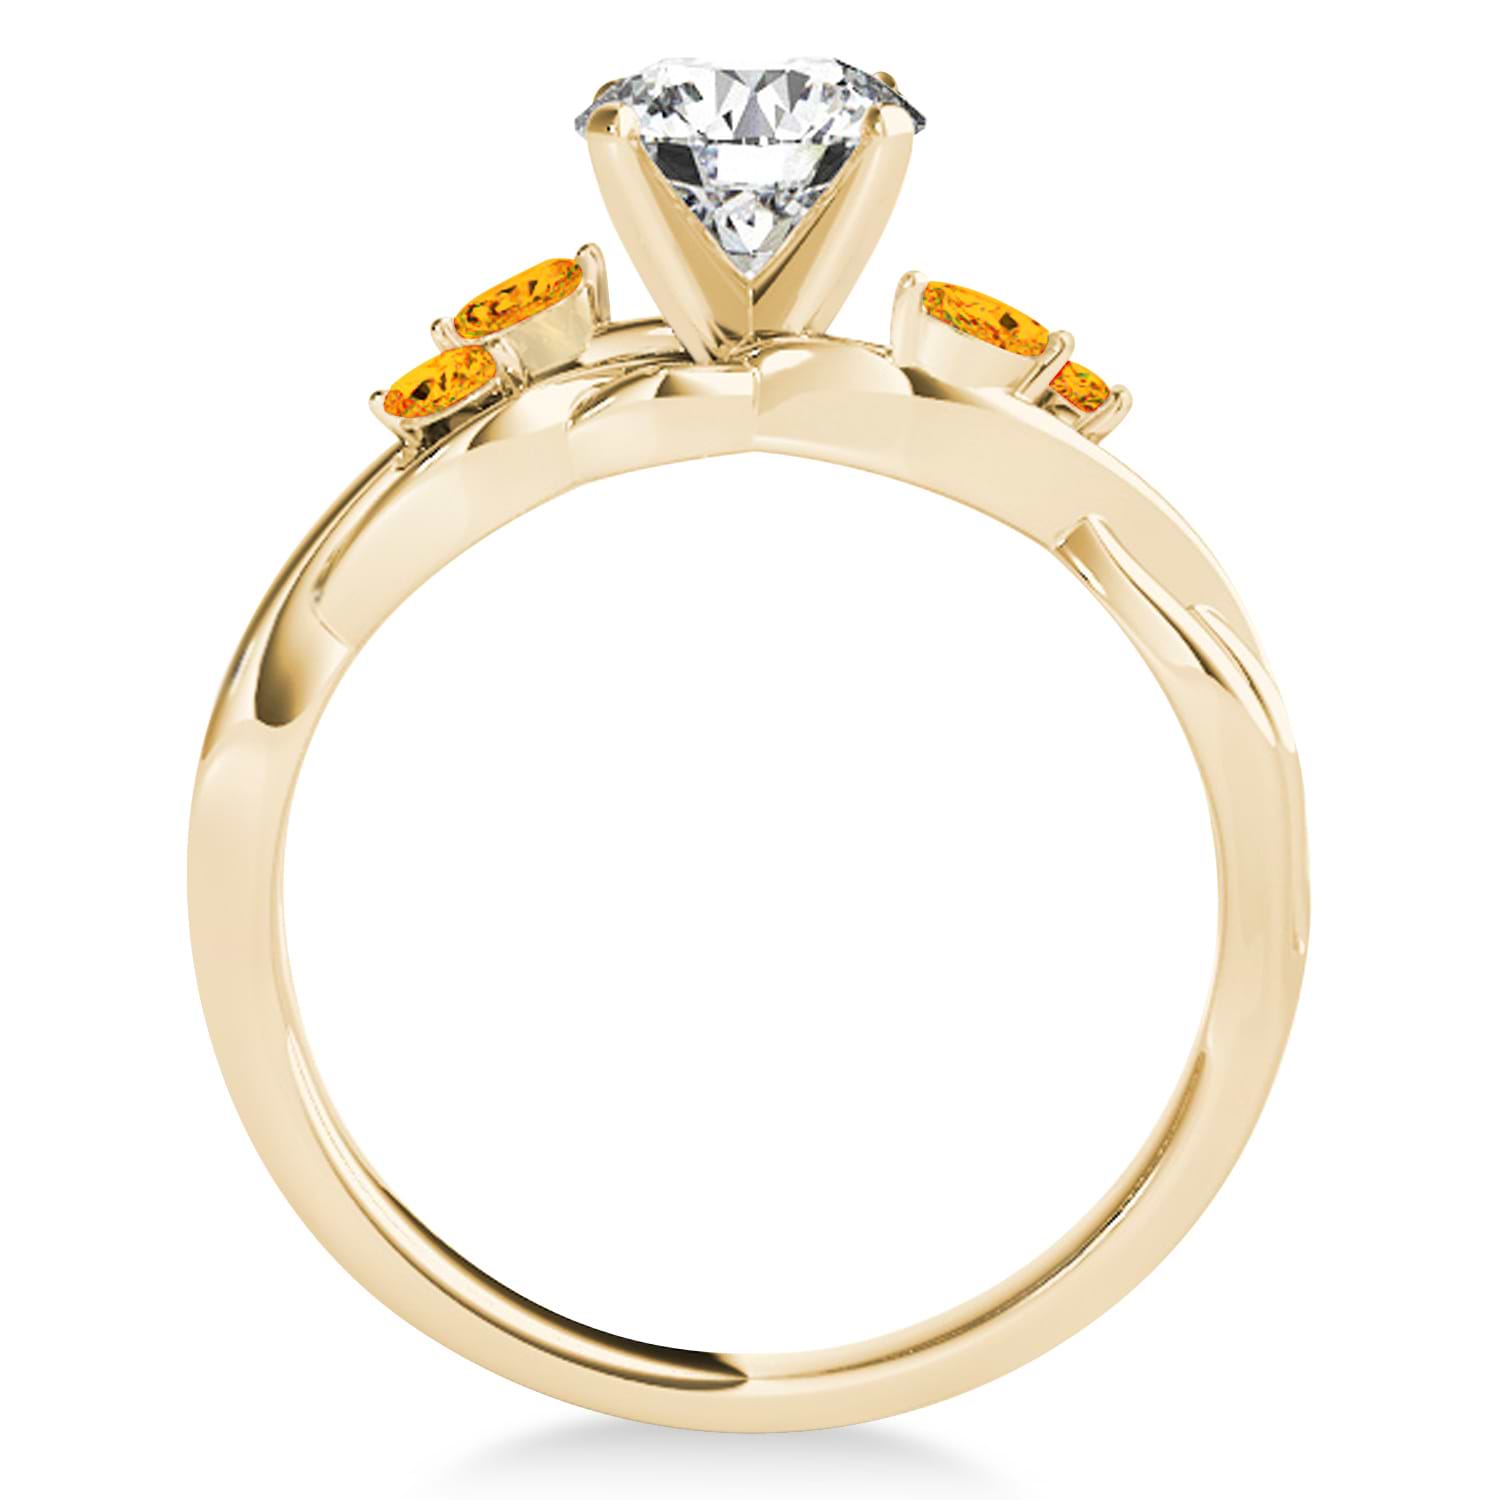 Marquise Citrine & Diamond Bridal Set Setting 18k Yellow Gold (0.43ct)